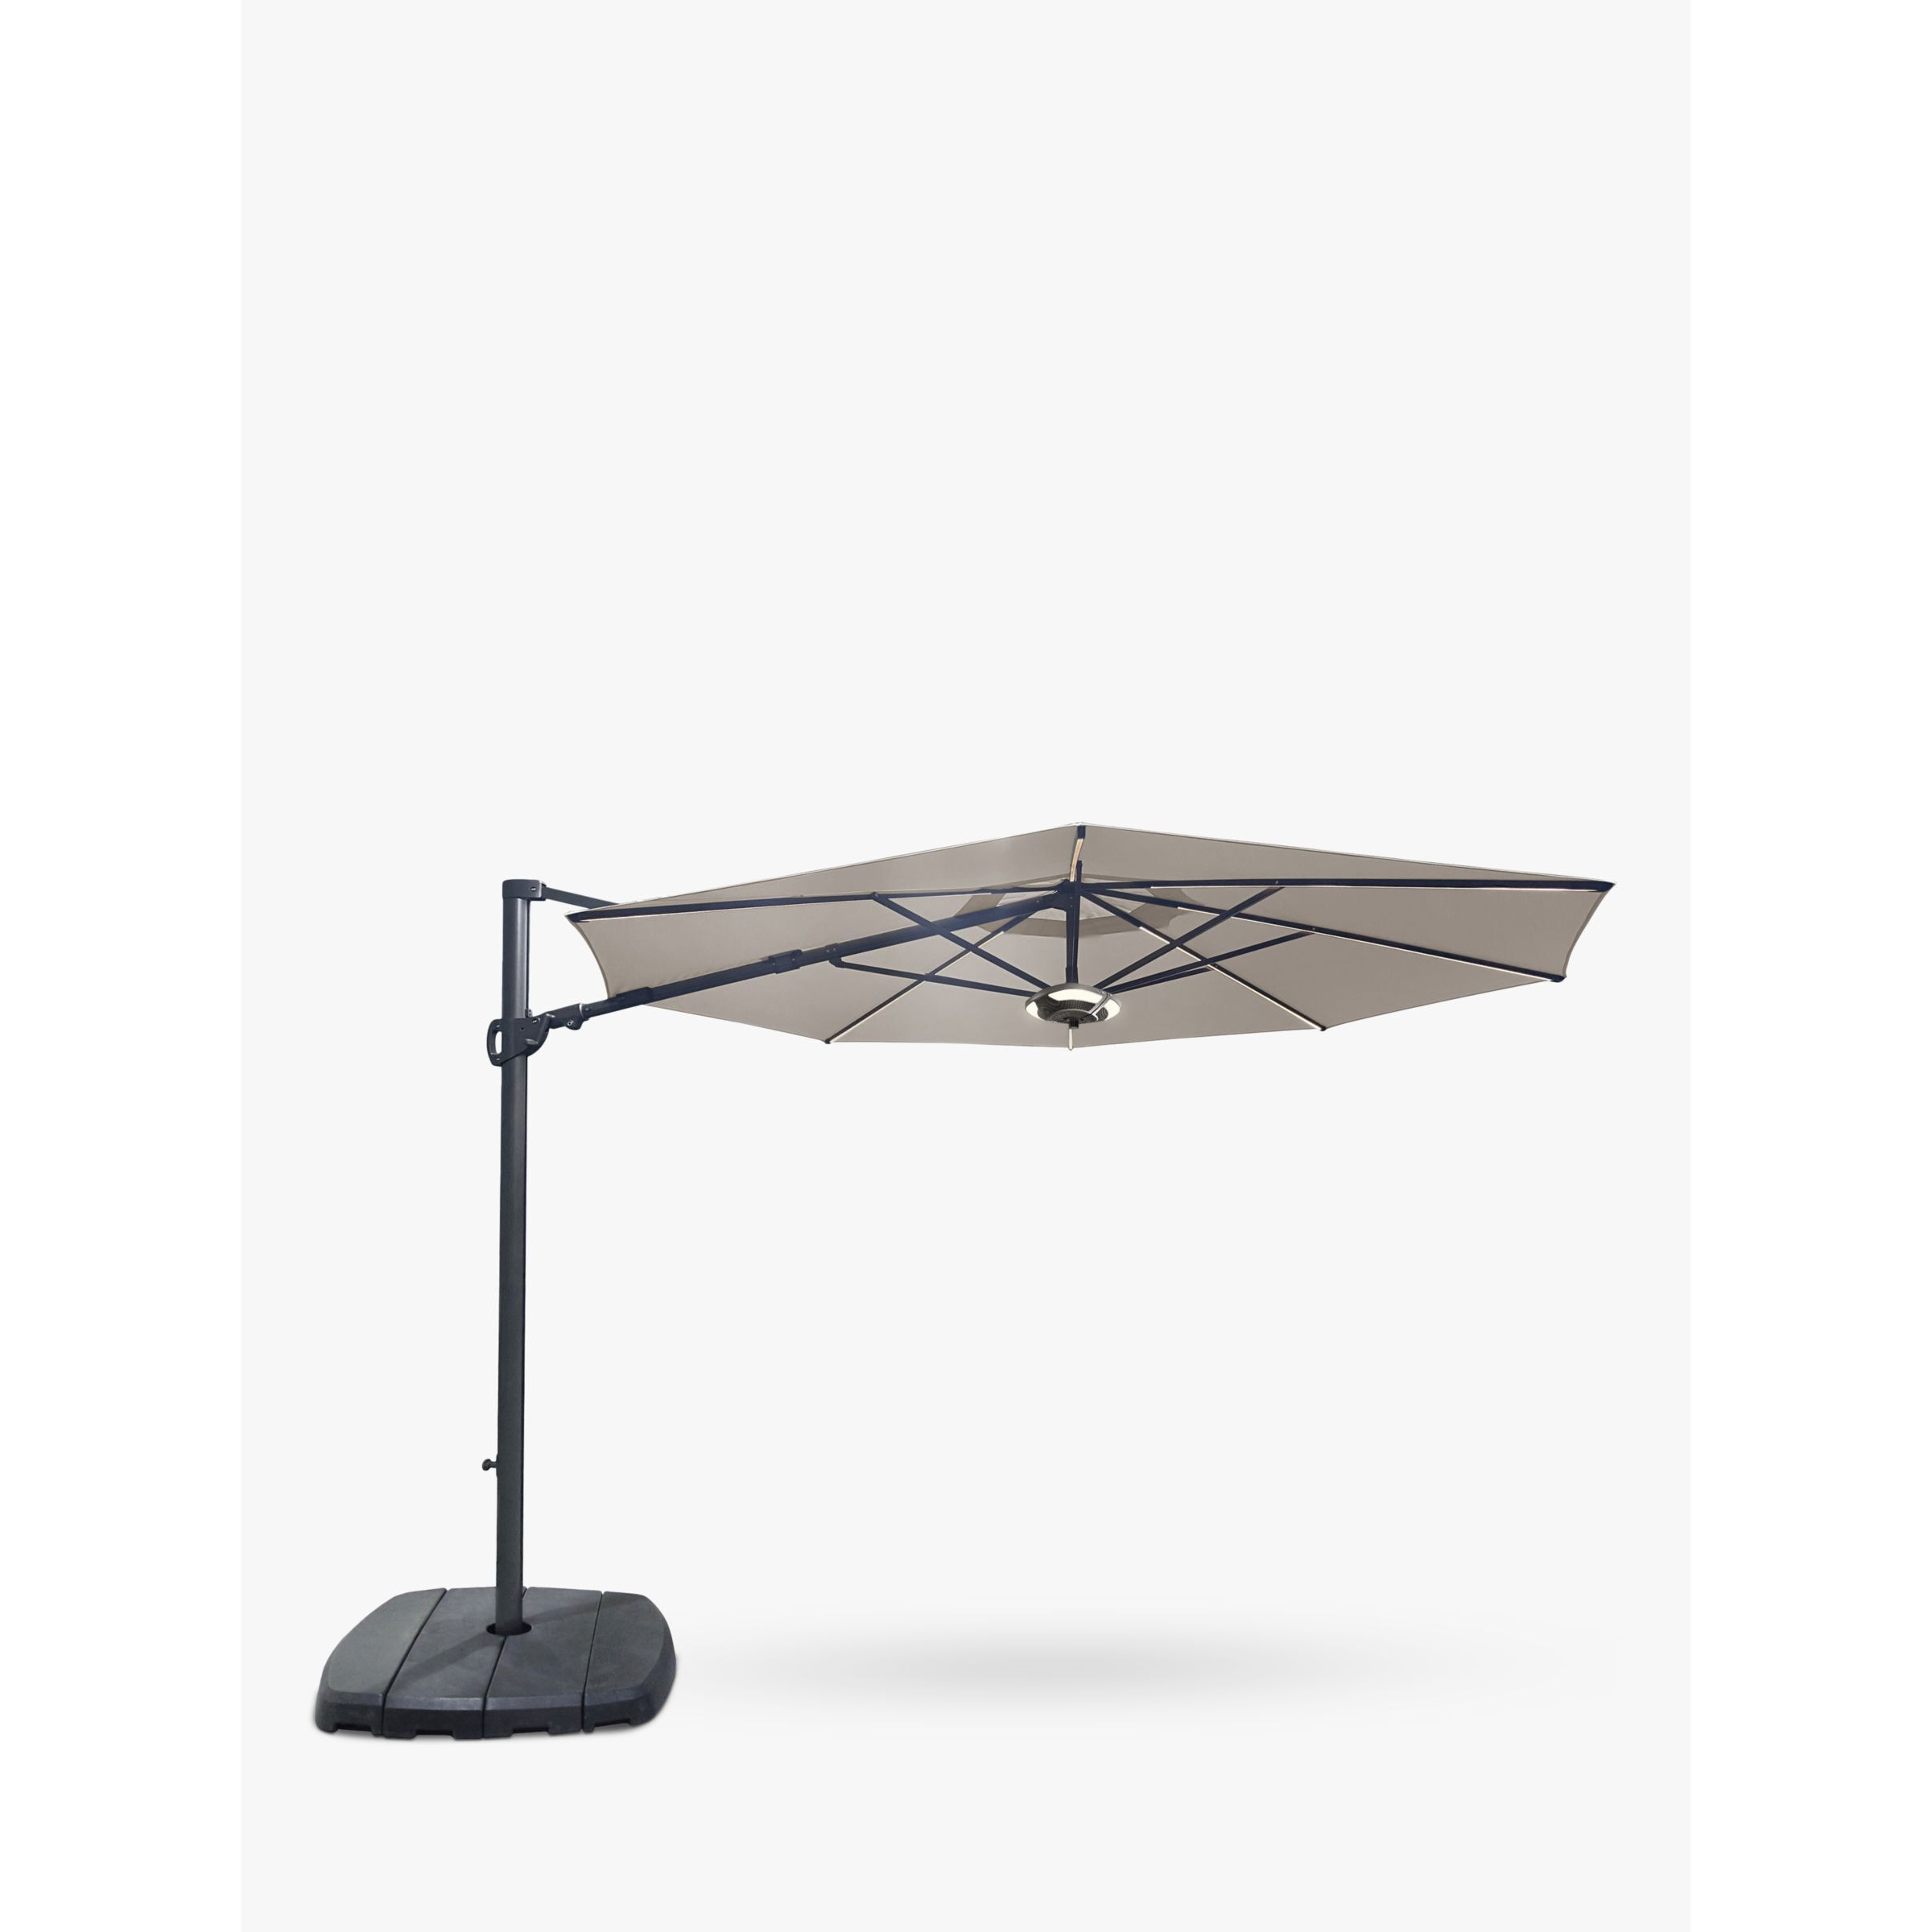 KETTLER Free Arm Tilt Canopy LED Light Freestanding Garden Parasol with Base, 3.3m - image 1